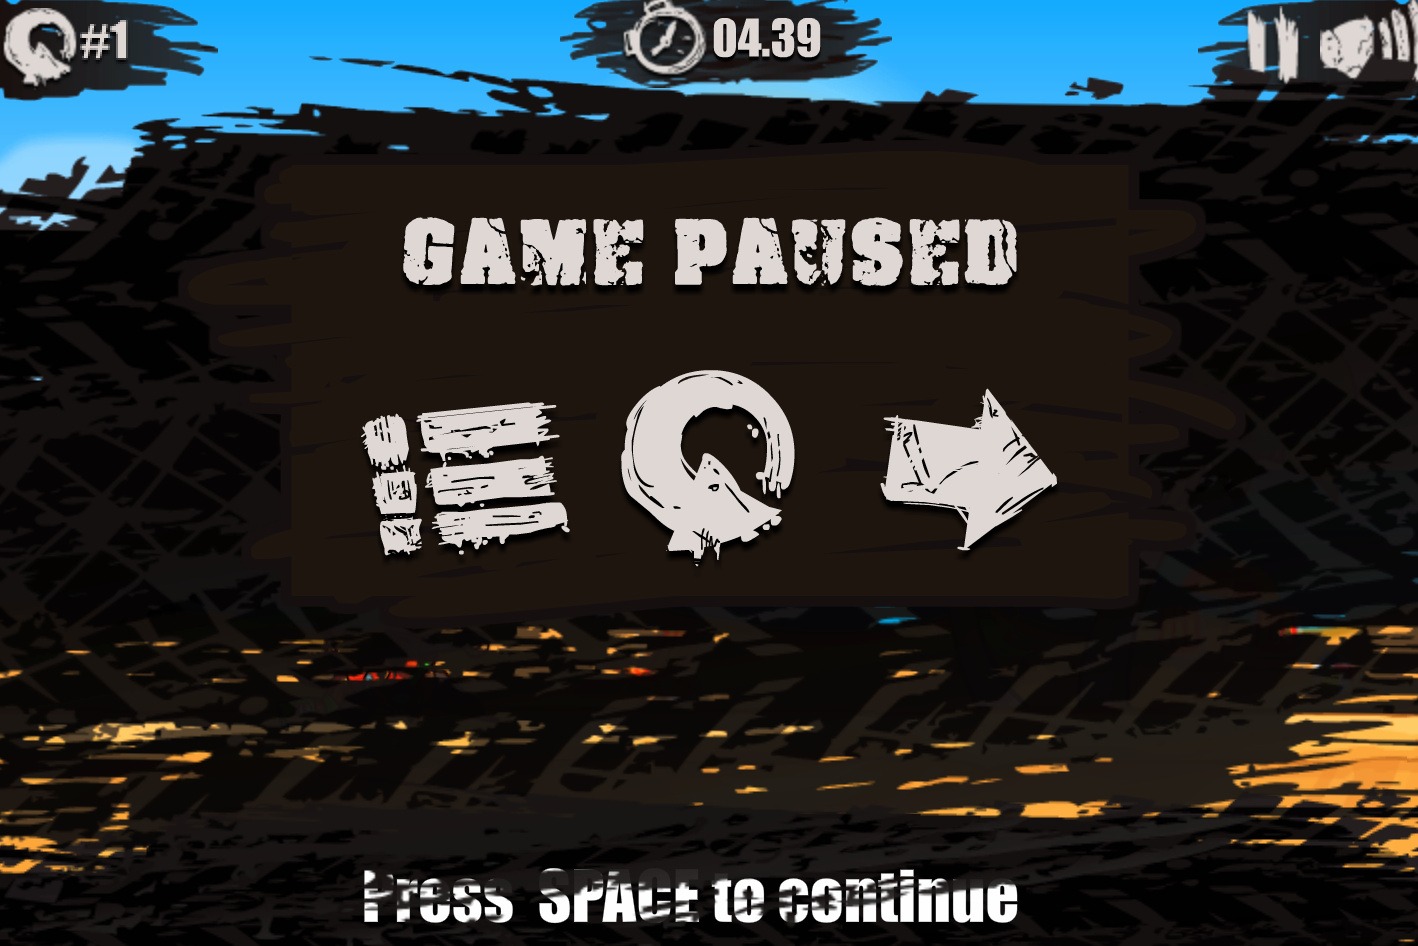 Game paused